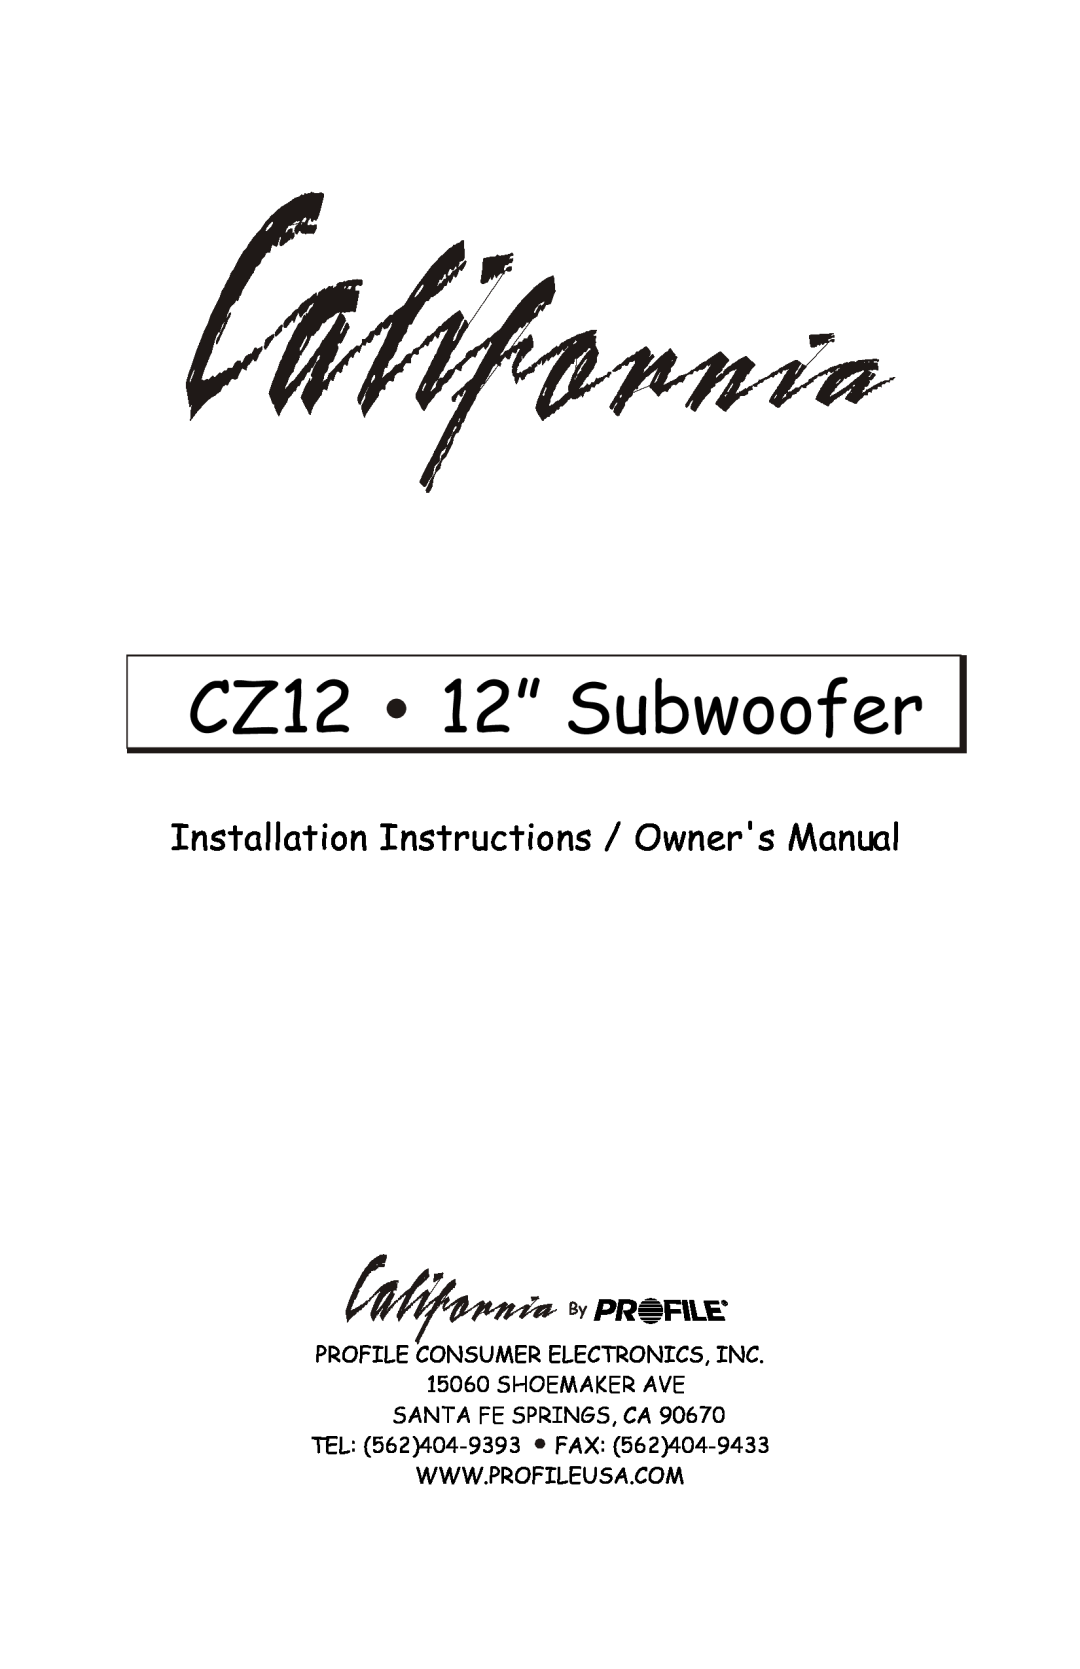 Profile installation instructions CZ12 12” Subwoofer 